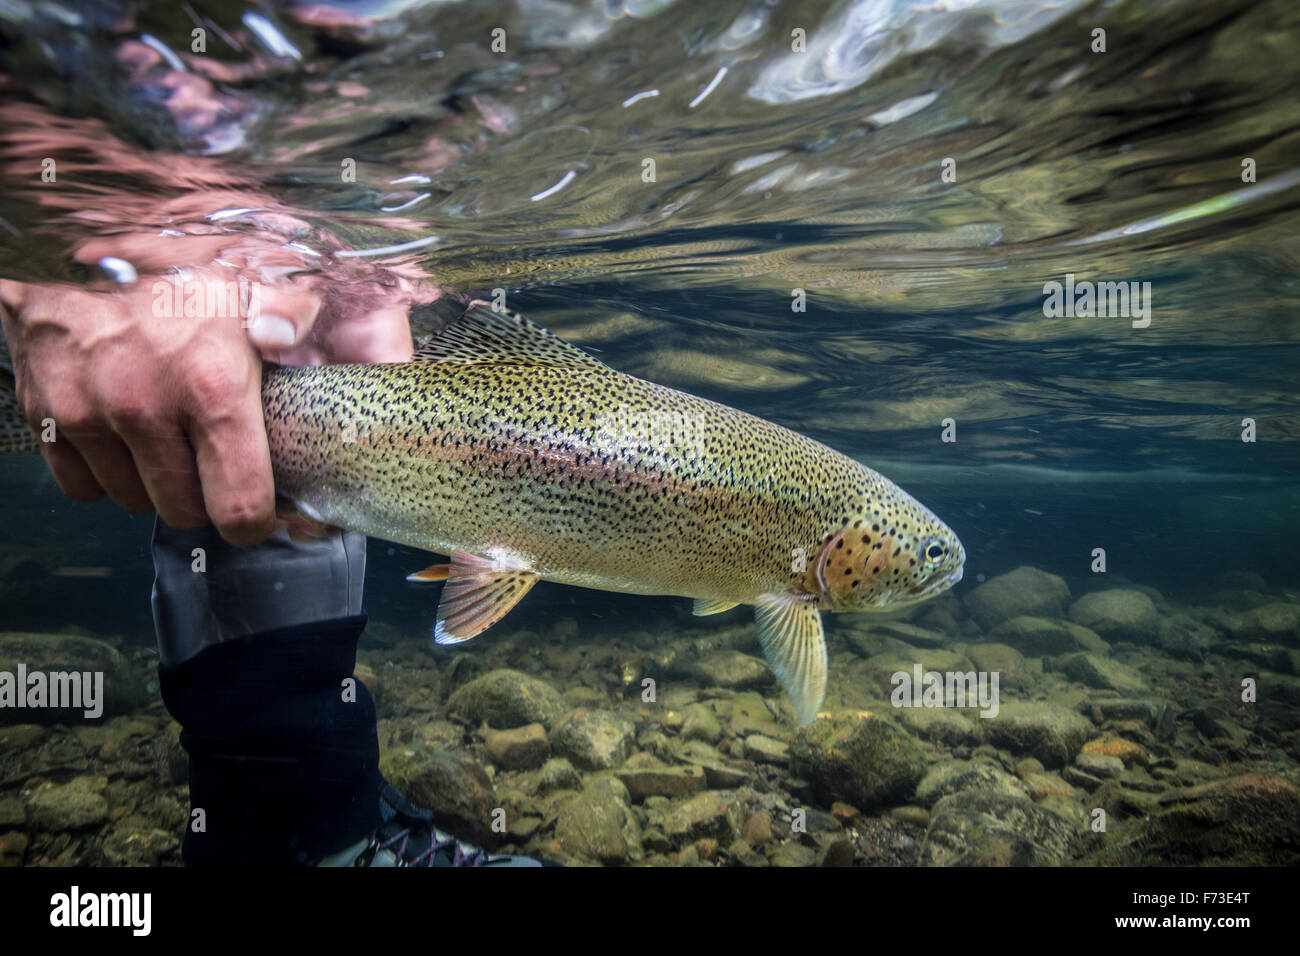 Releasing a rainbow trout in the Bristol Bay region, Alaska. Stock Photo